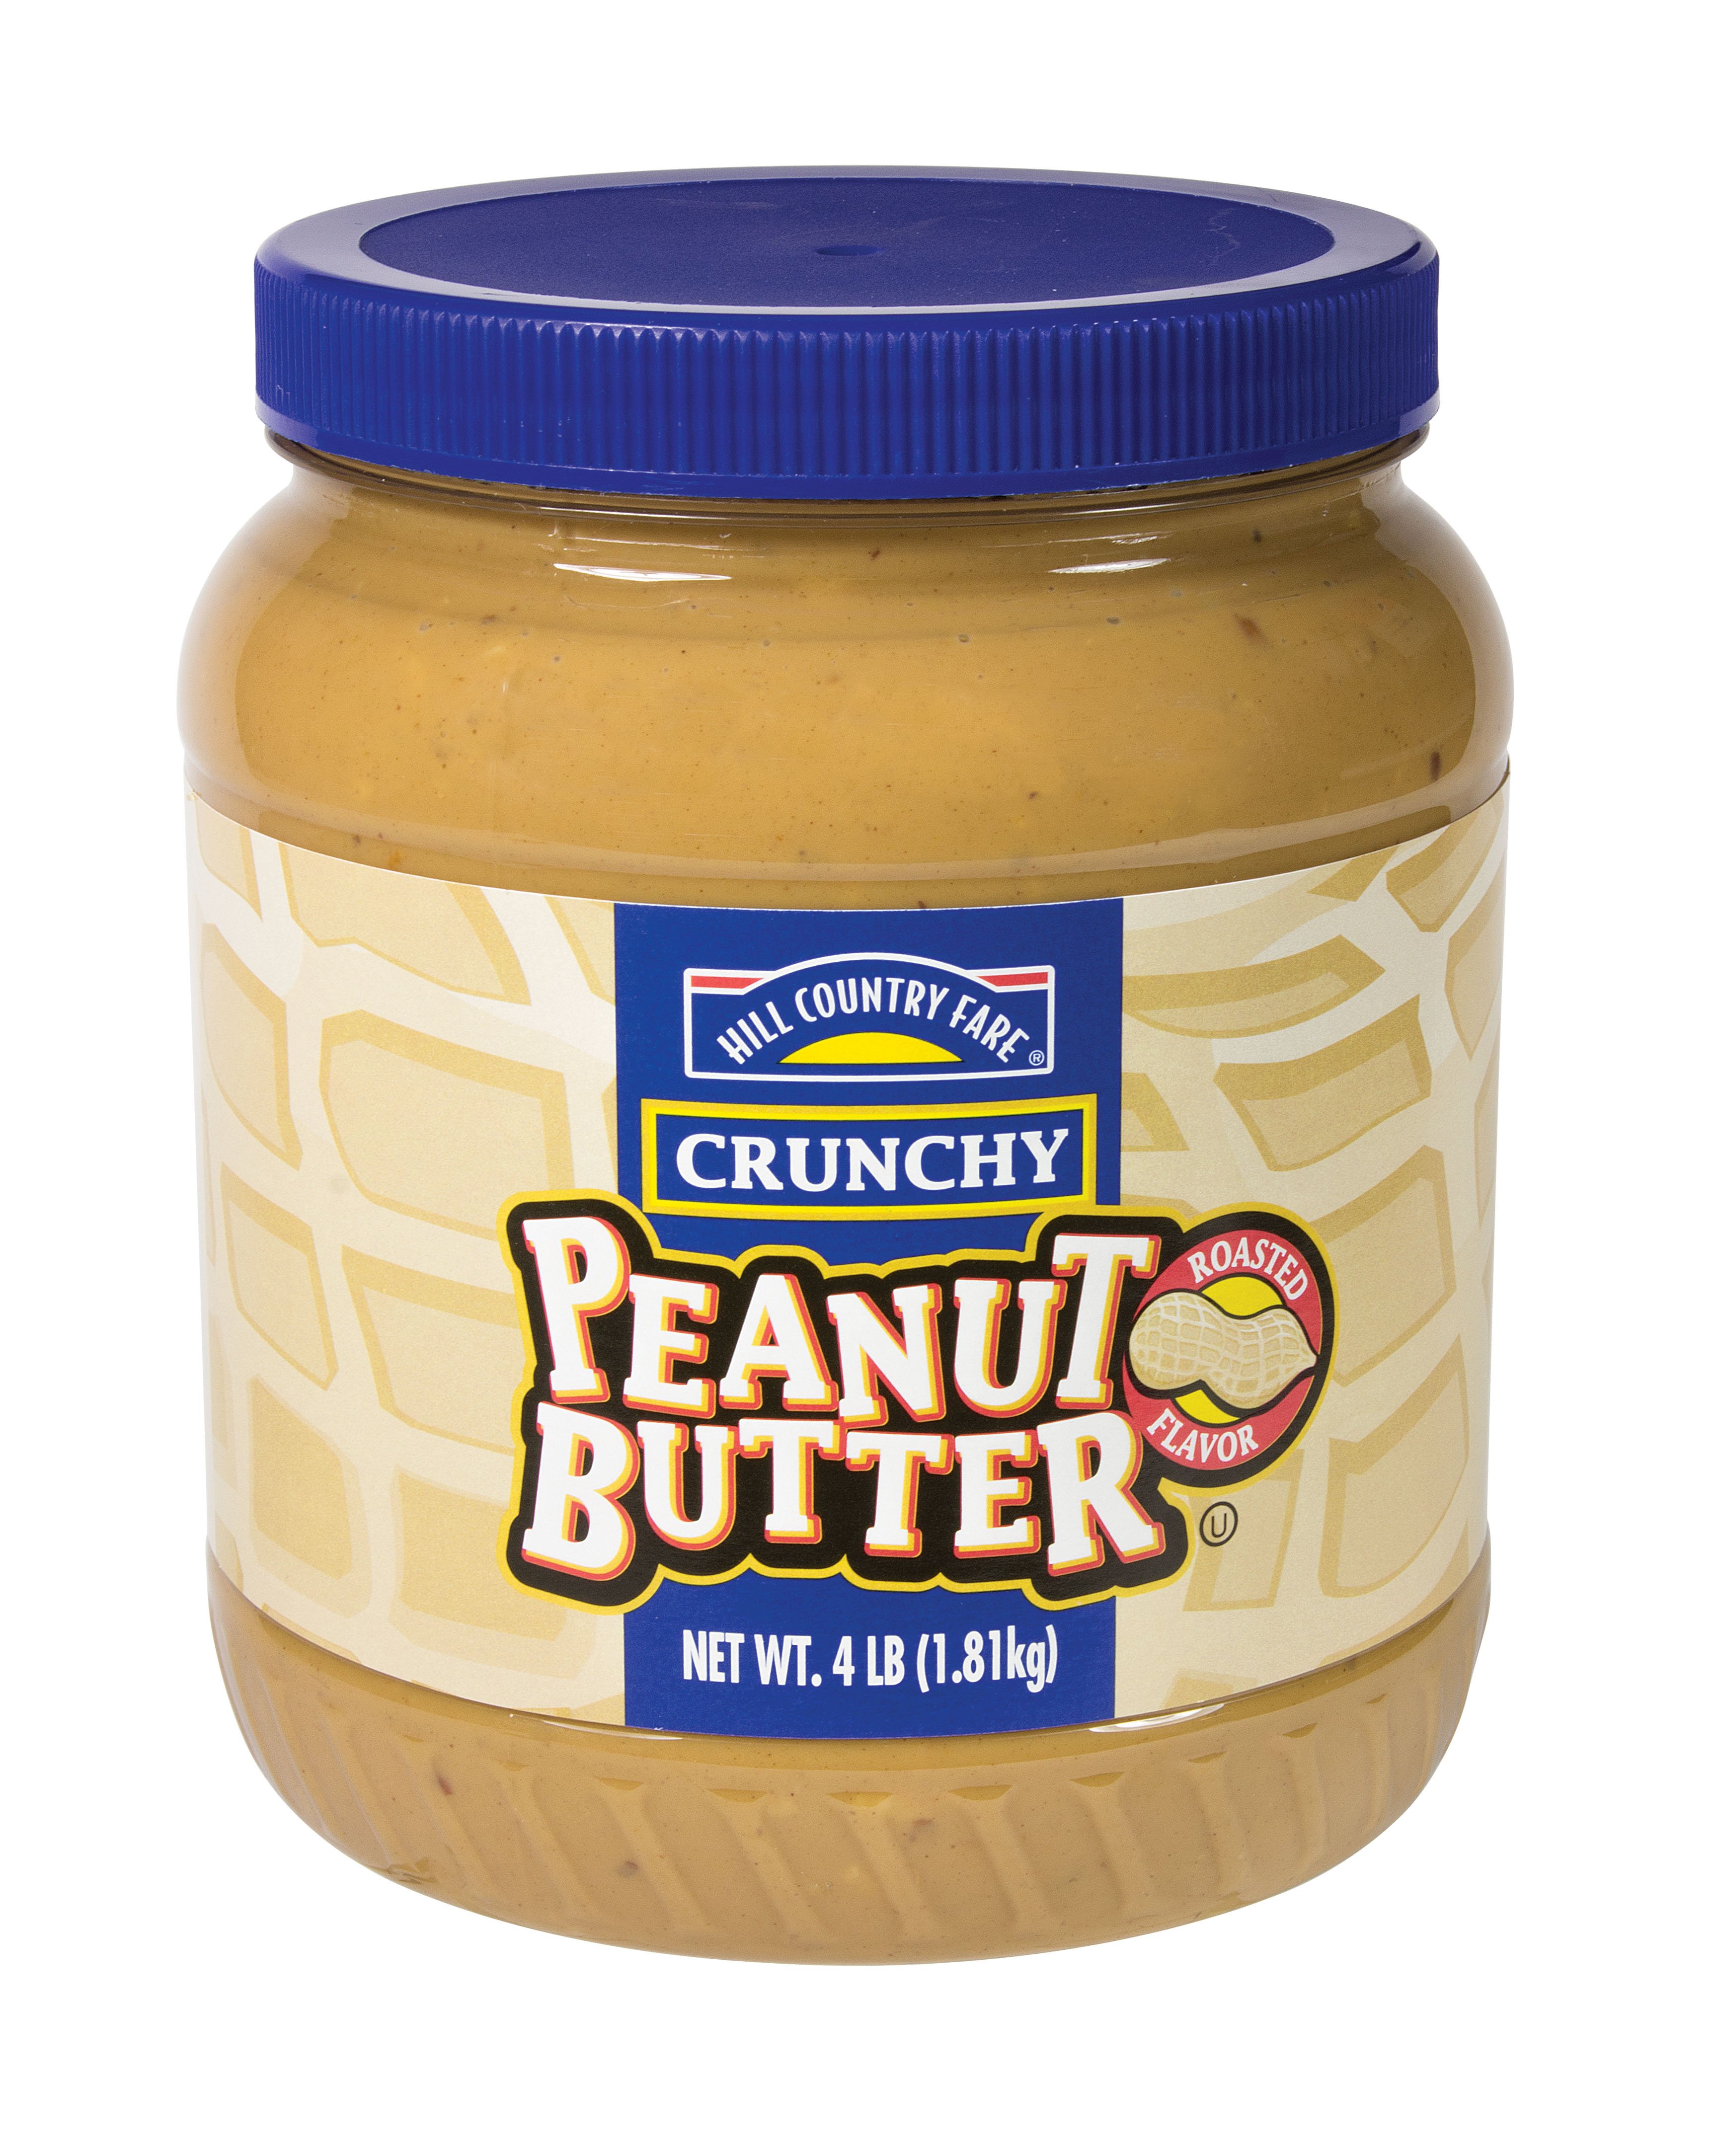 H-E-B Natural Peanut Butter Spread – Crunchy - Shop Peanut Butter at H-E-B